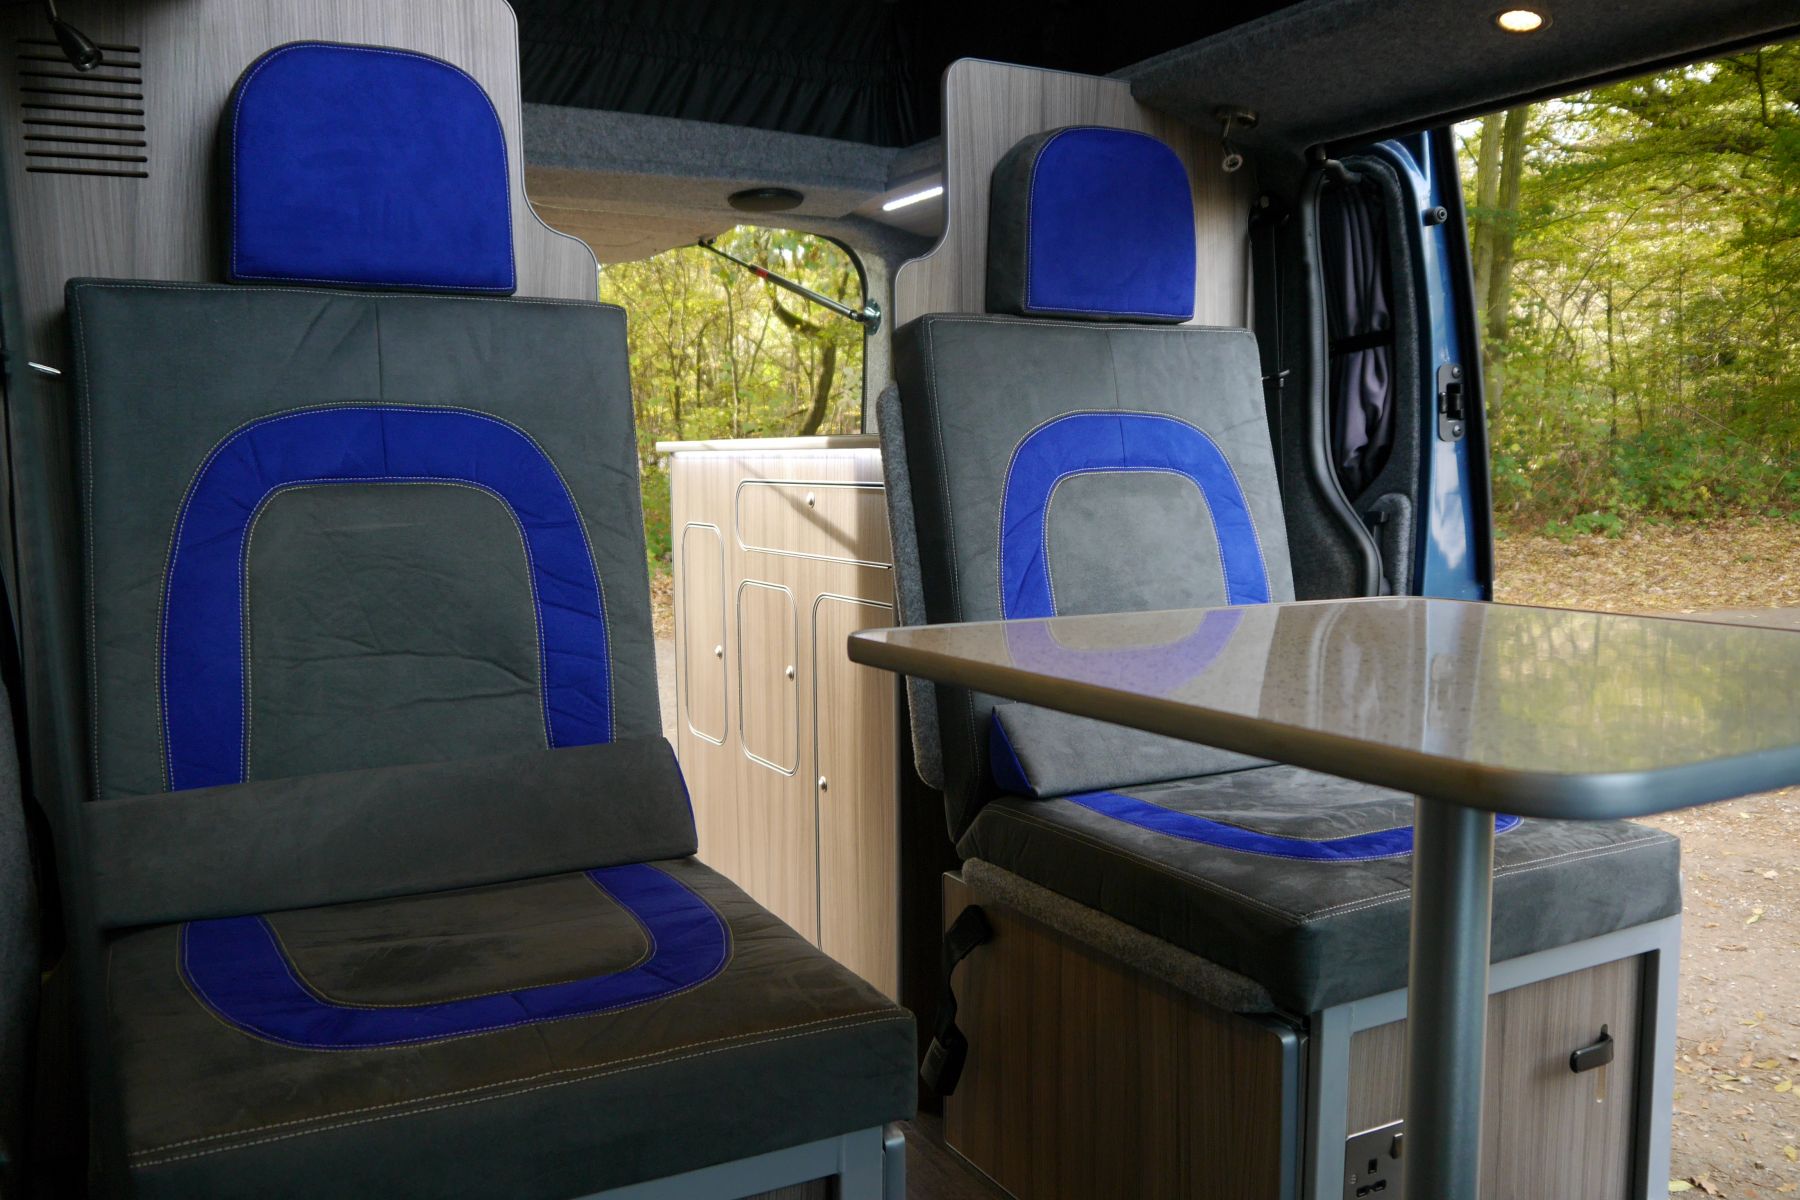 Blue Paradise Sussex Campervans for sale Rear seats Boyriven fabric.JPG